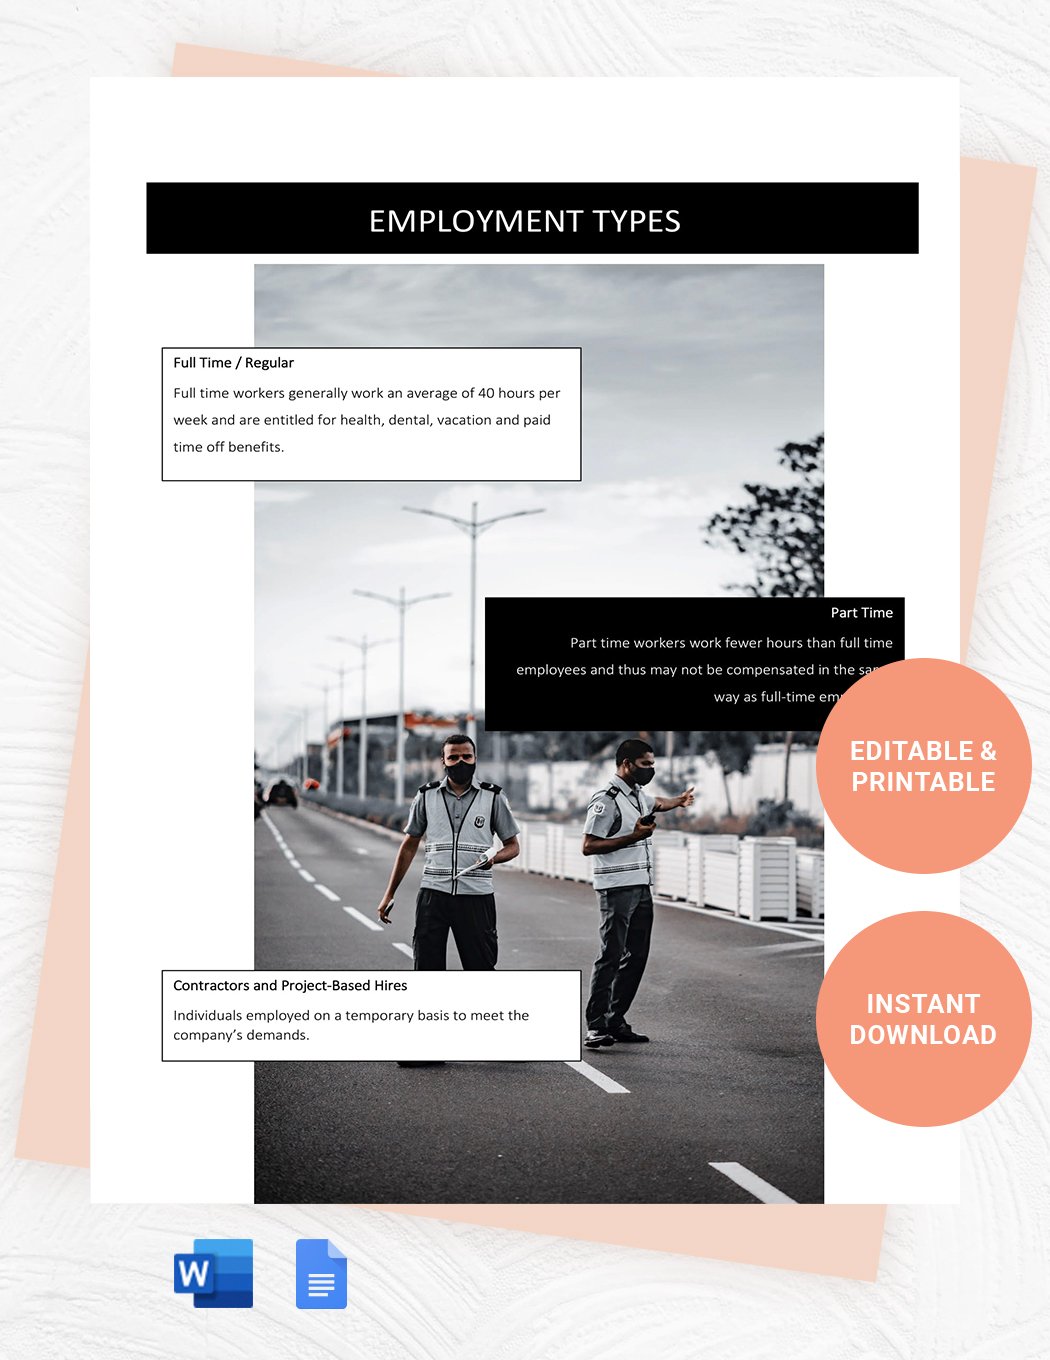 Simple Employee Handbook Template